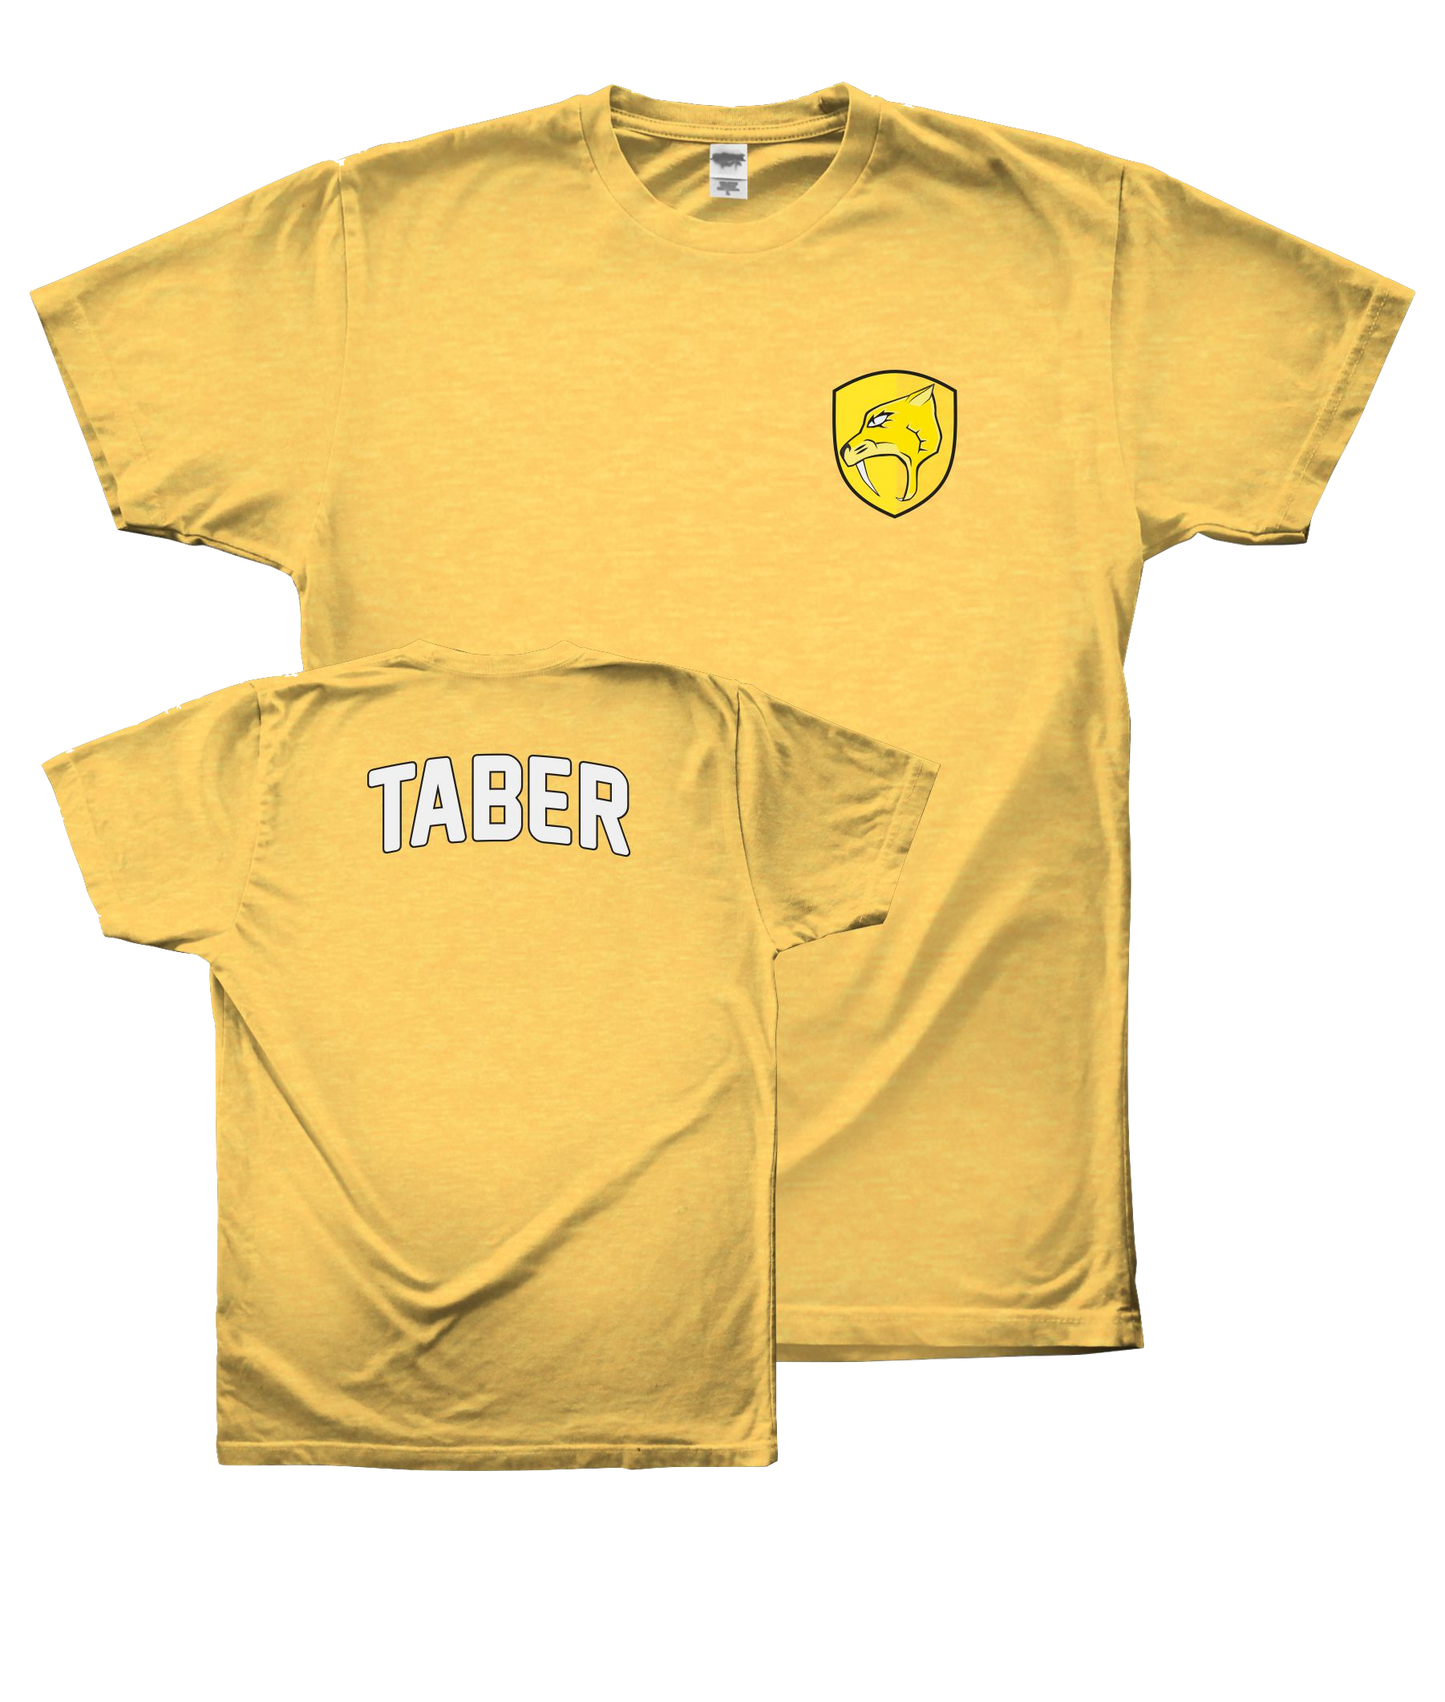 Taber Shirt: A